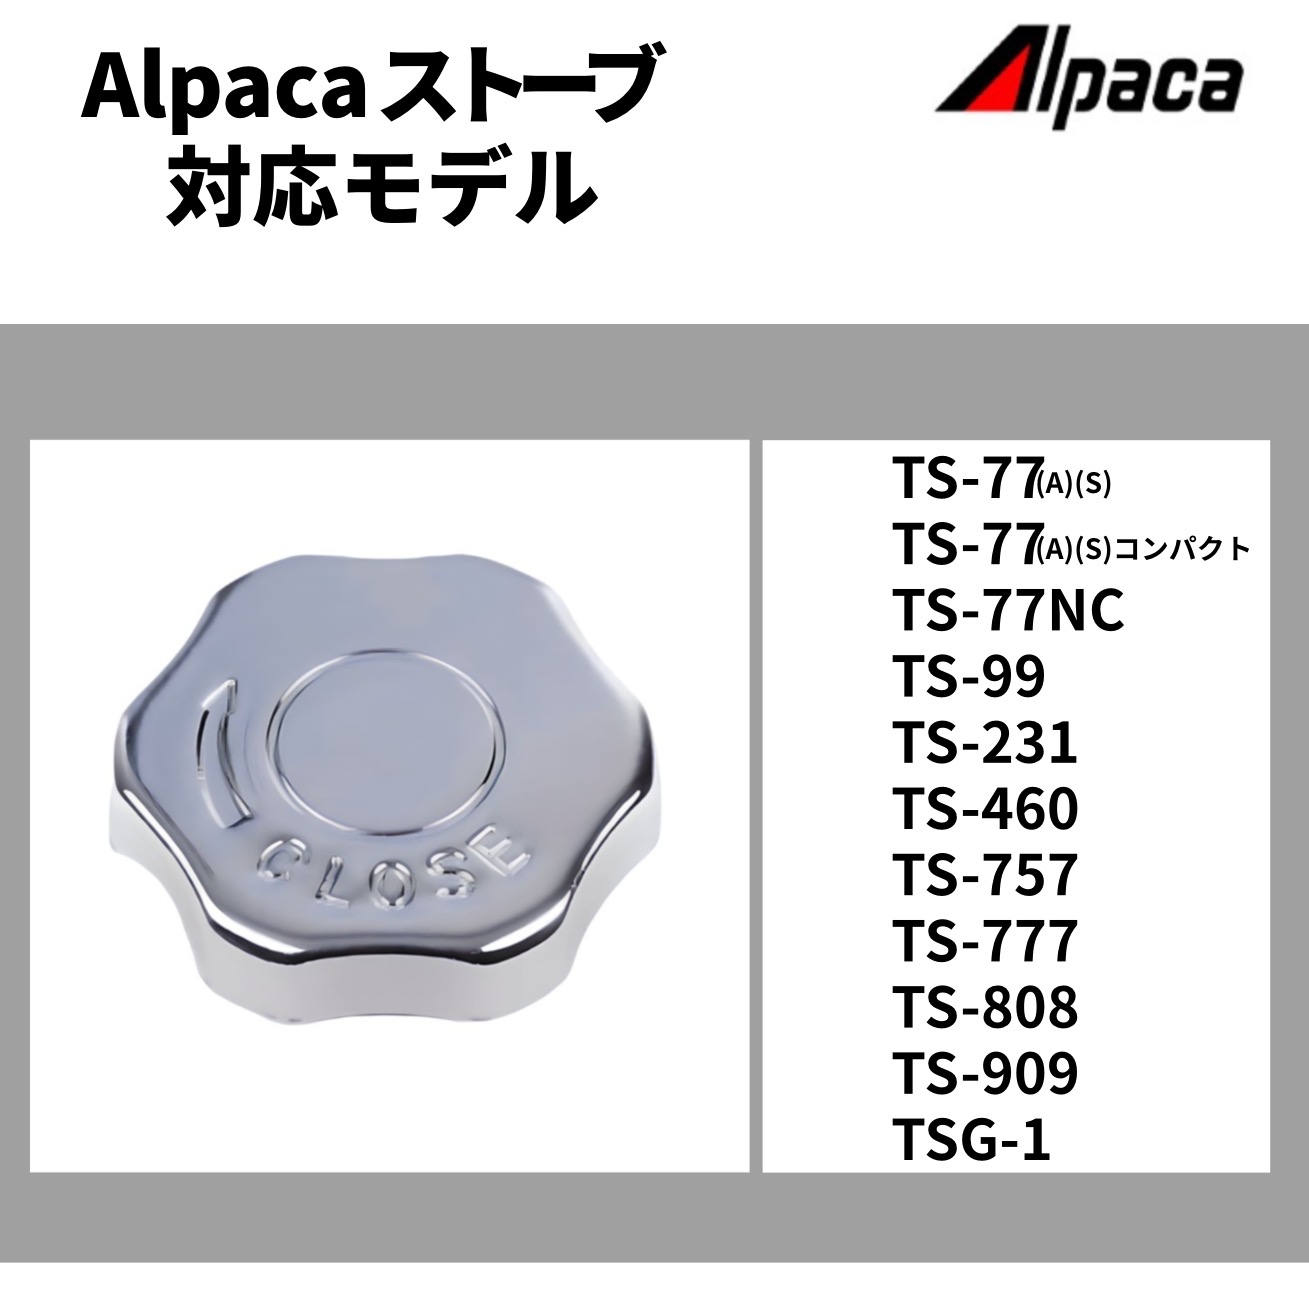  альпака плита оригинальная деталь горловина топливного бака колпак детали Alpca плита альпака TS77 TS77A compact 